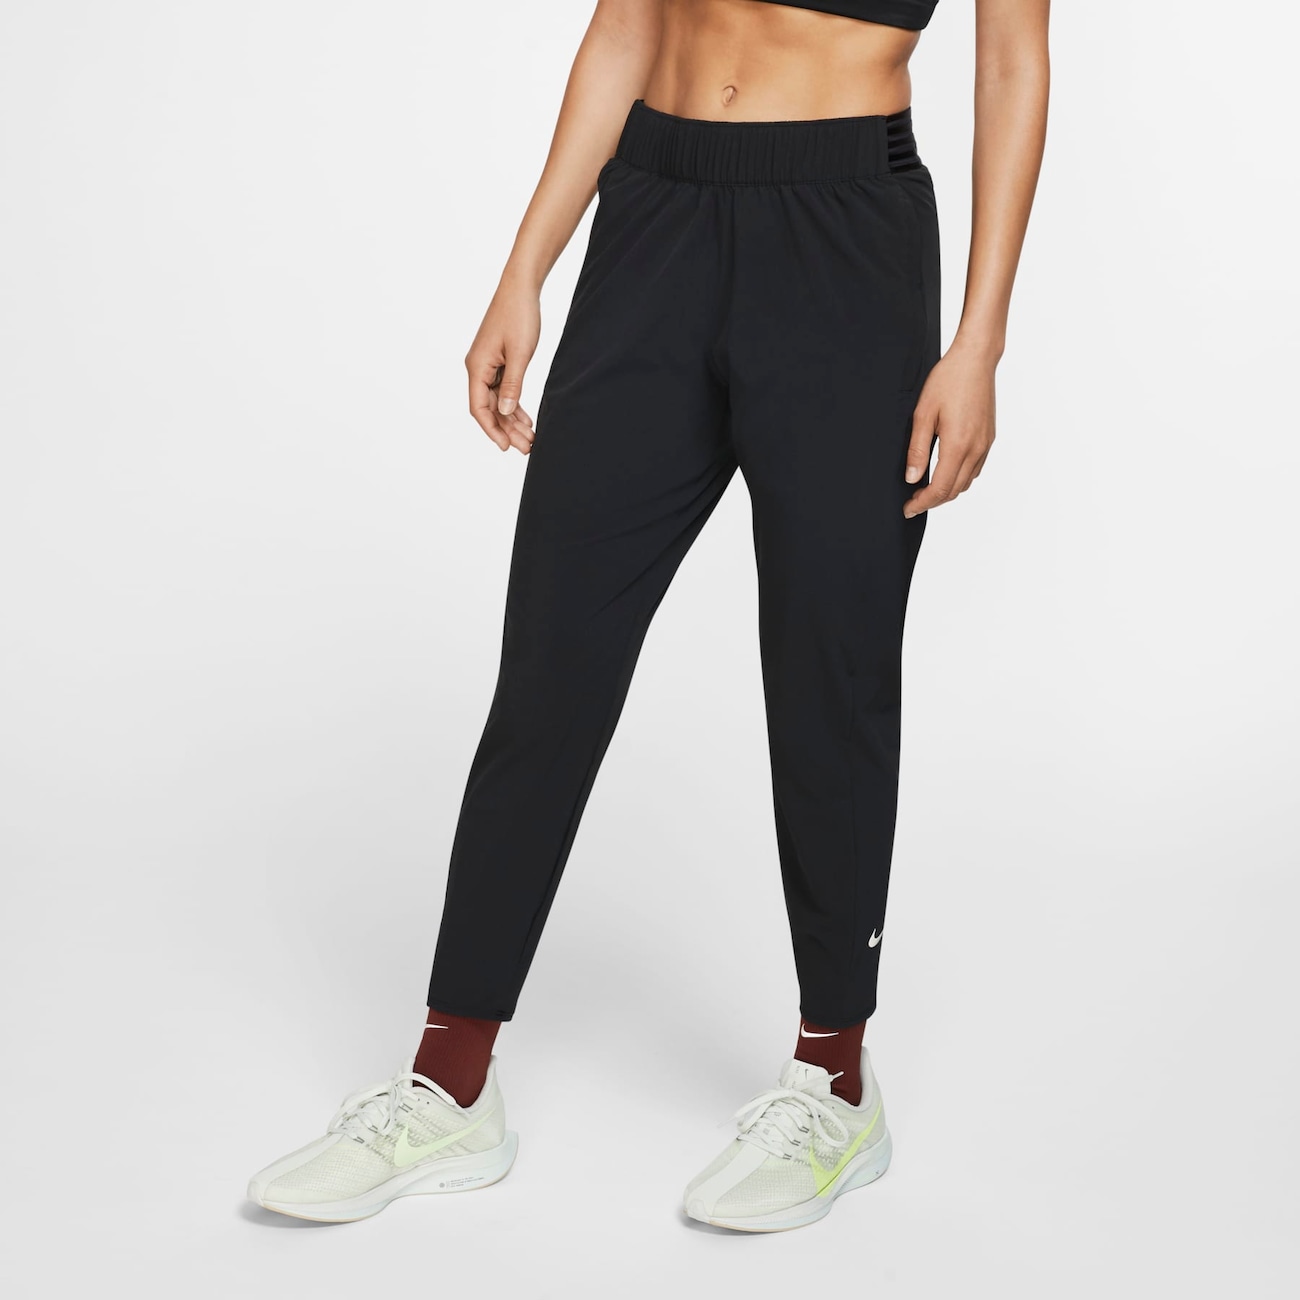 Calça Nike Essential Feminina